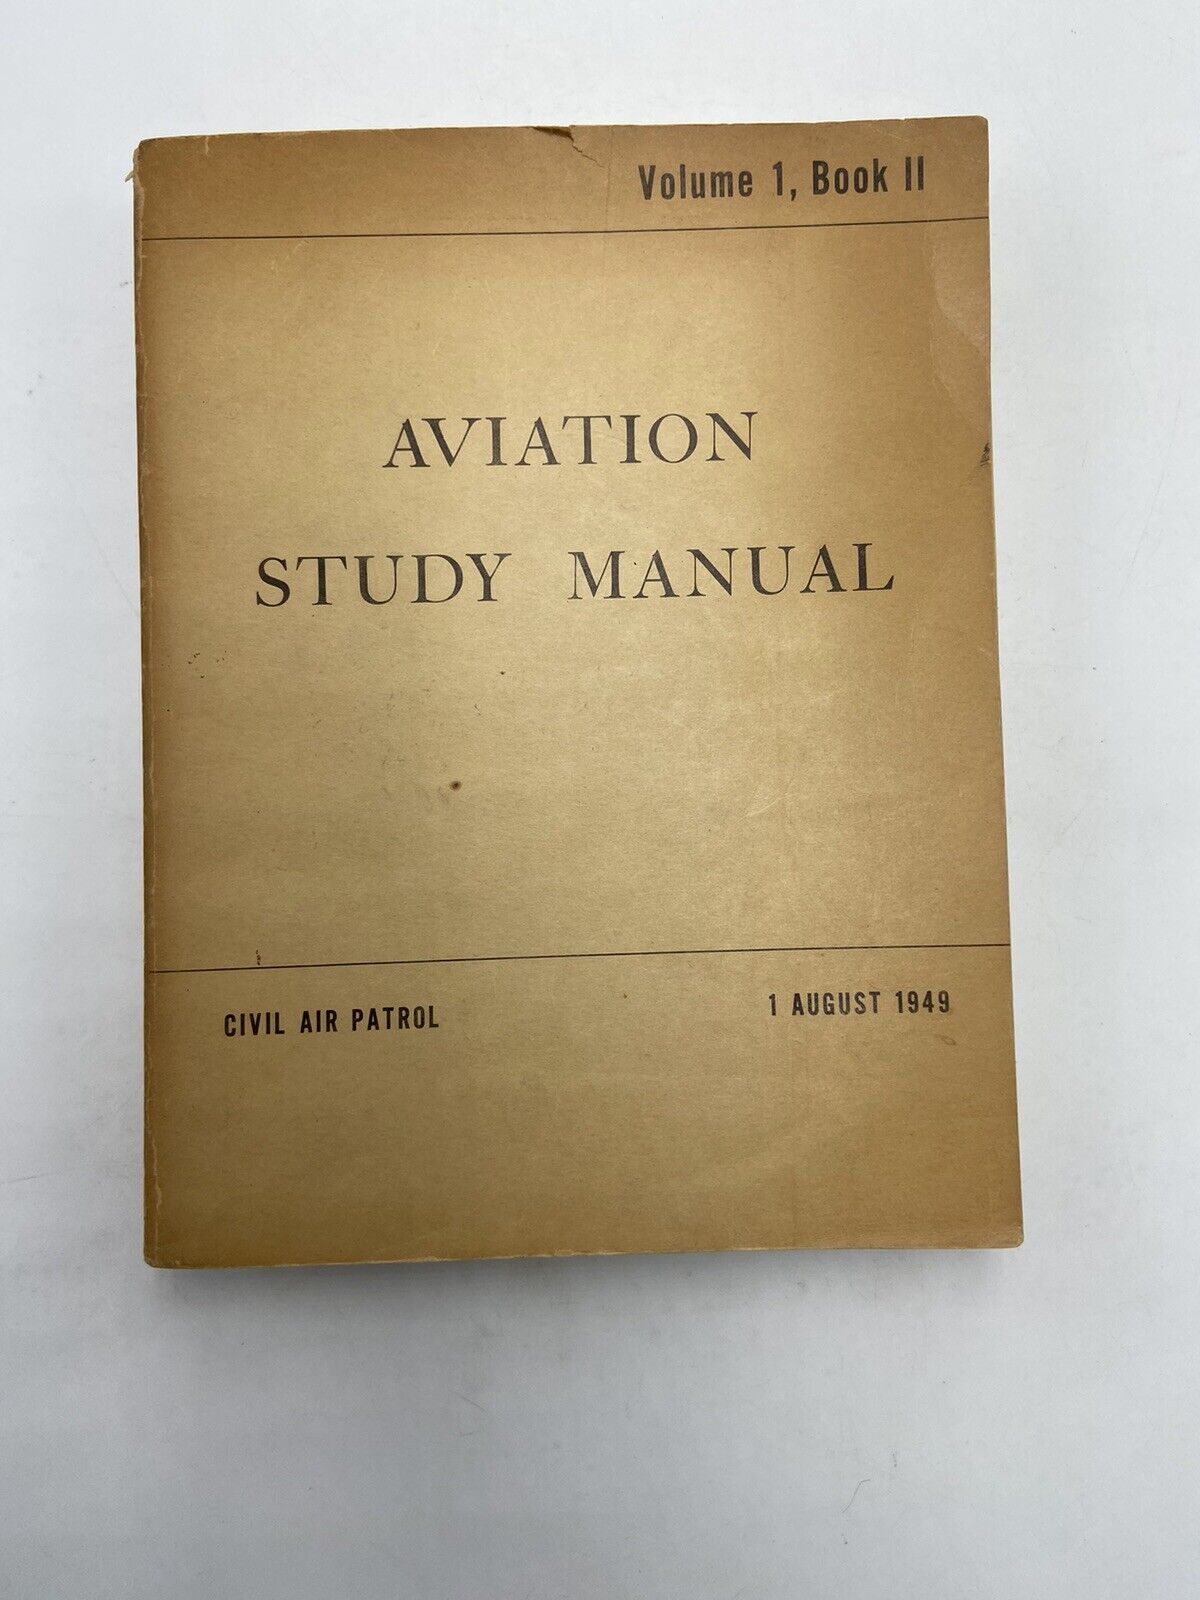 1949 AVIATION STUDY MANUAL - Civil Air Patrol - Volume I, Book II